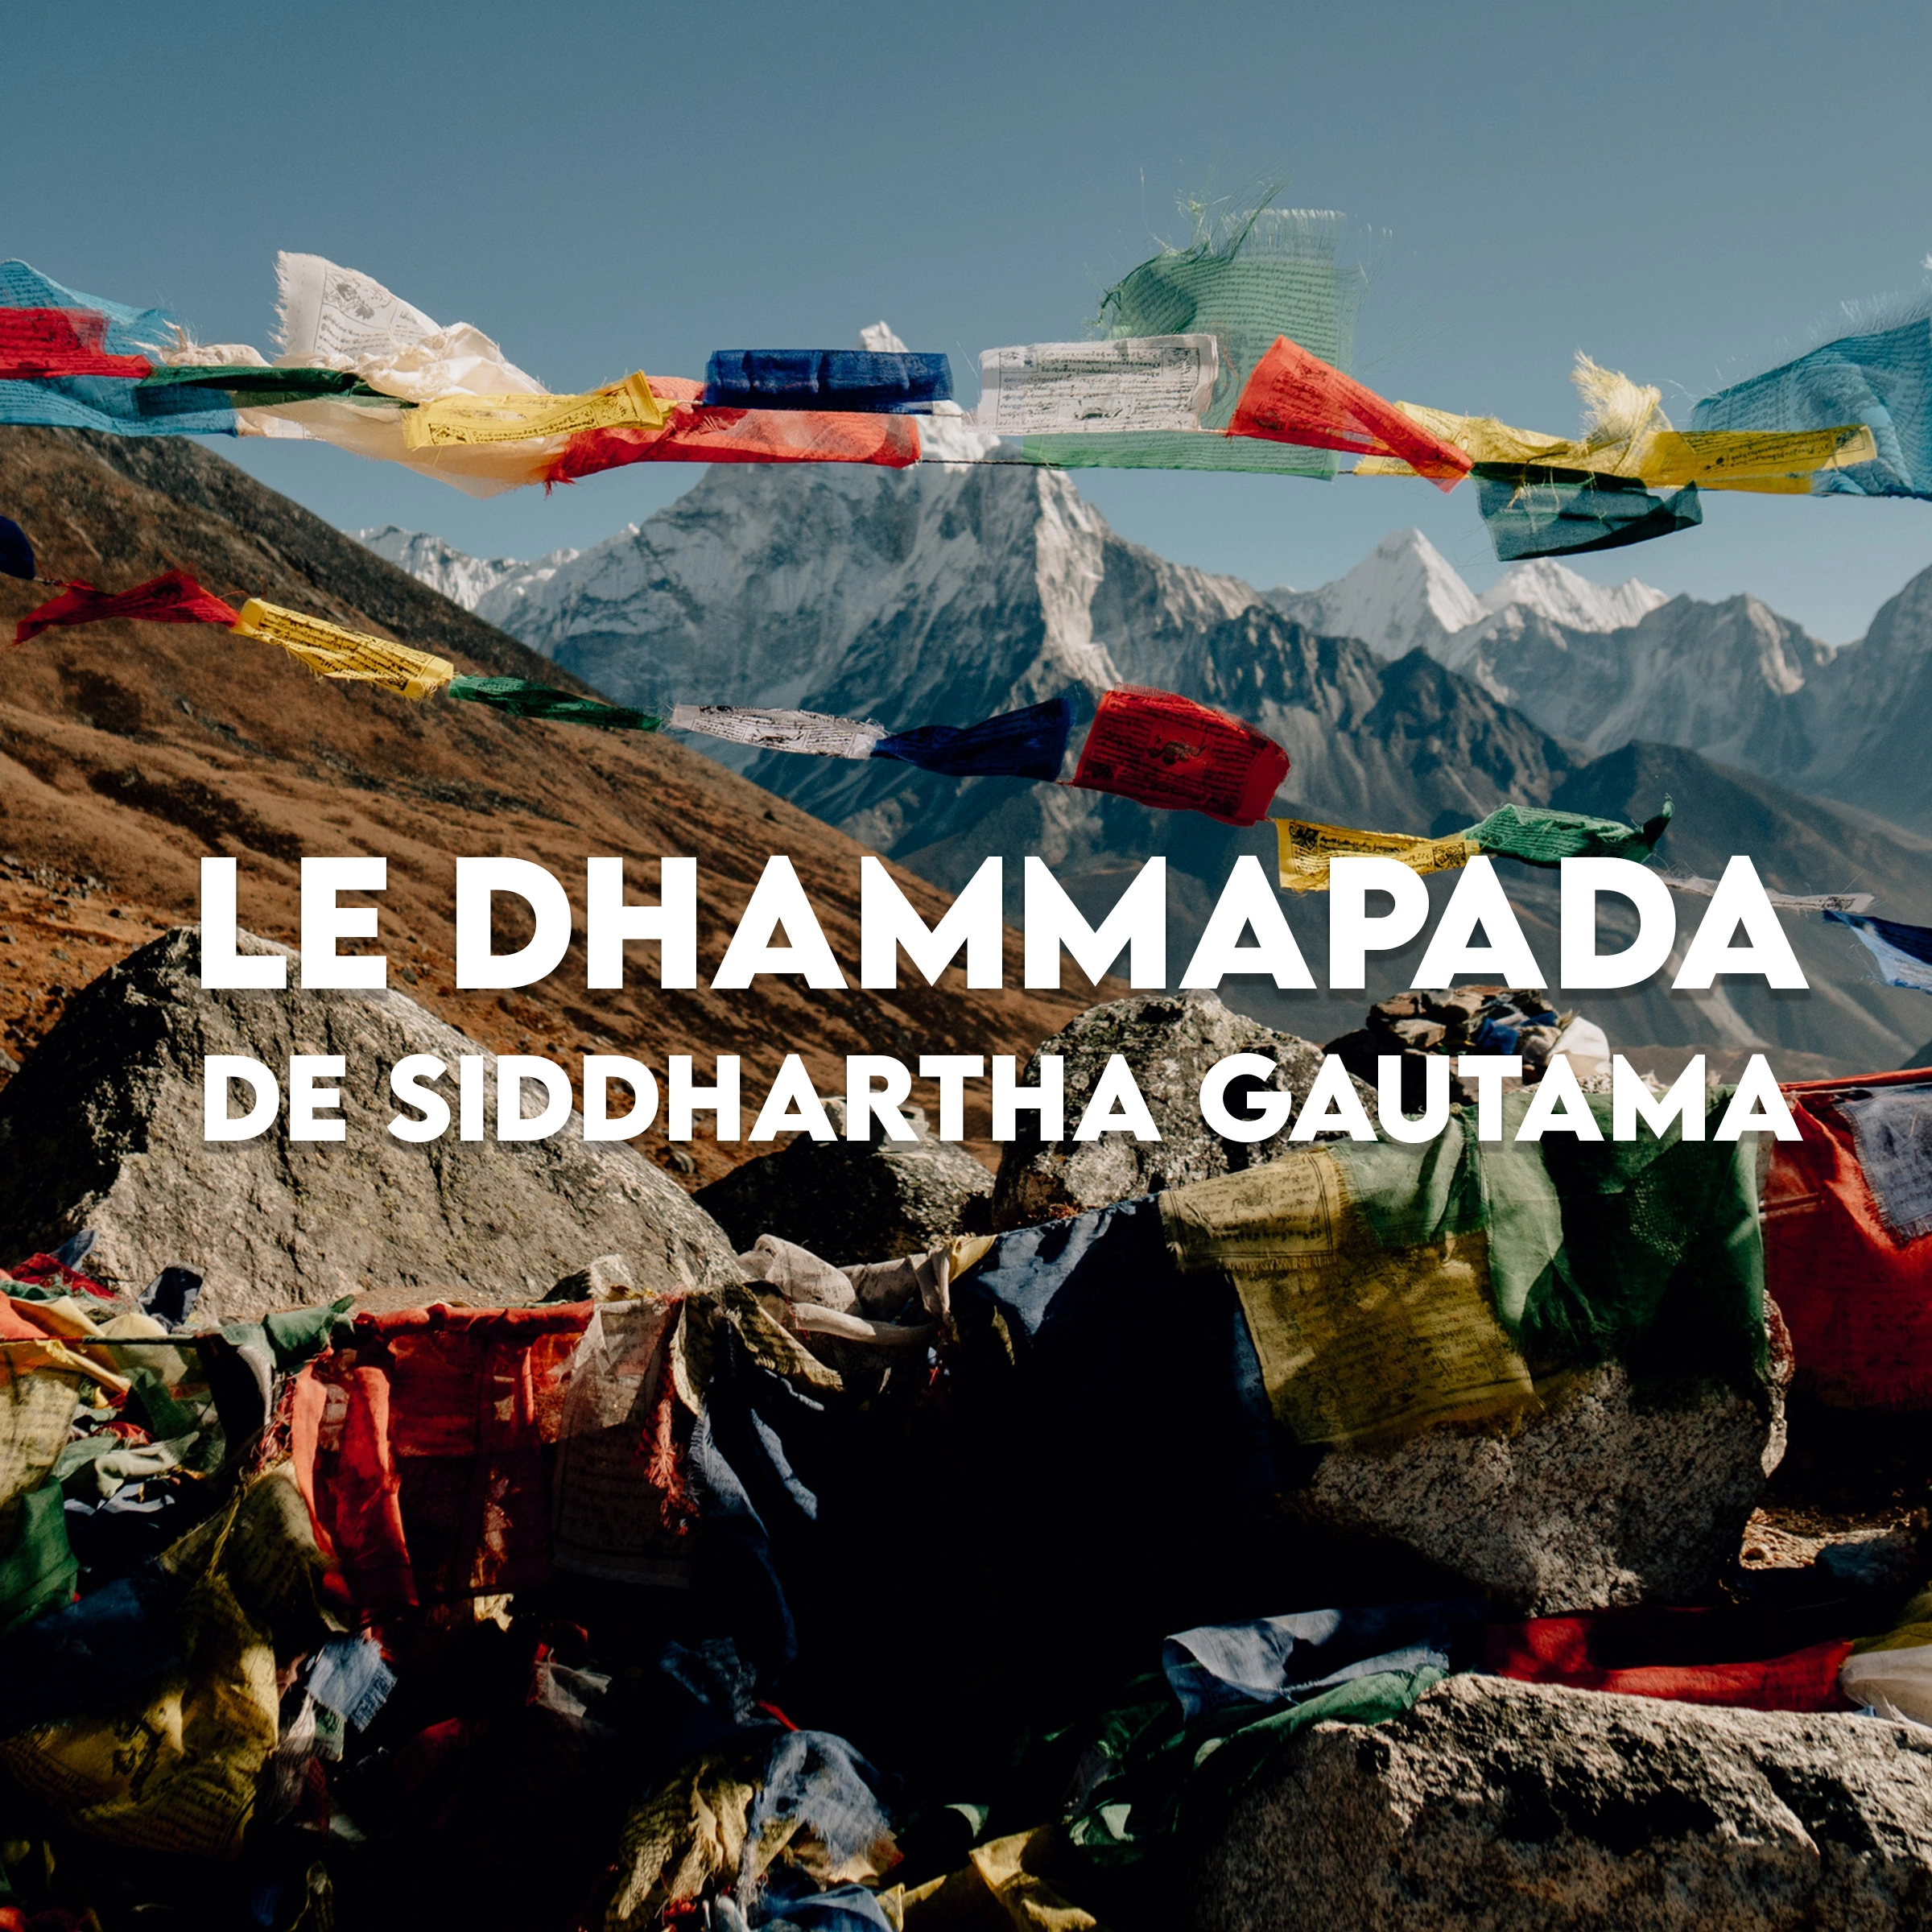 Le Dhammapada: Livre Audio Meditation Bouddhiste Audiobook by Siddhartha Gautama